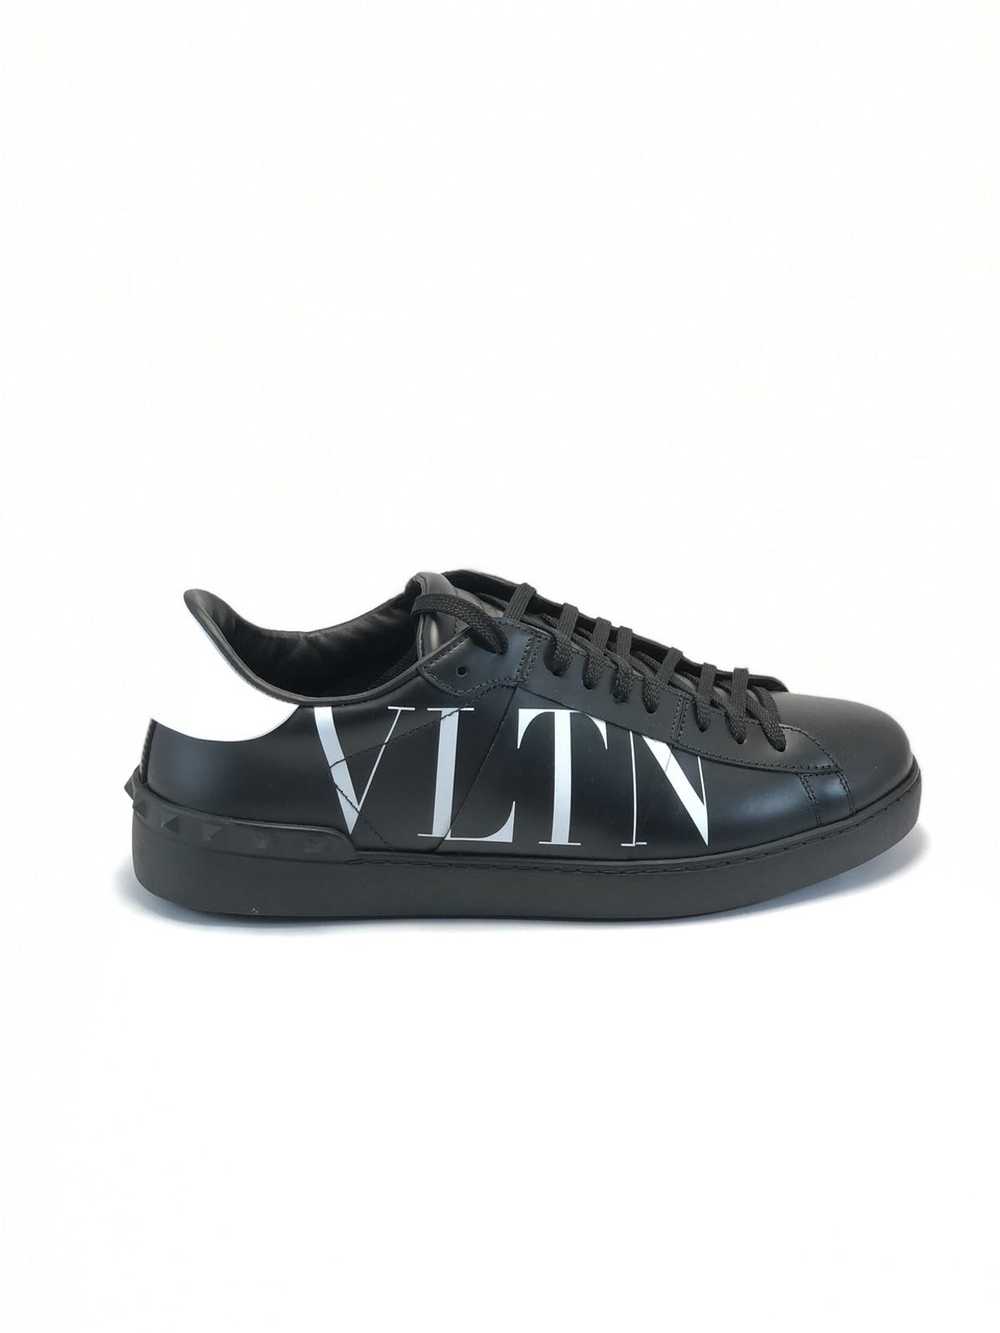 Valentino Valentino garavani sneakers - image 2